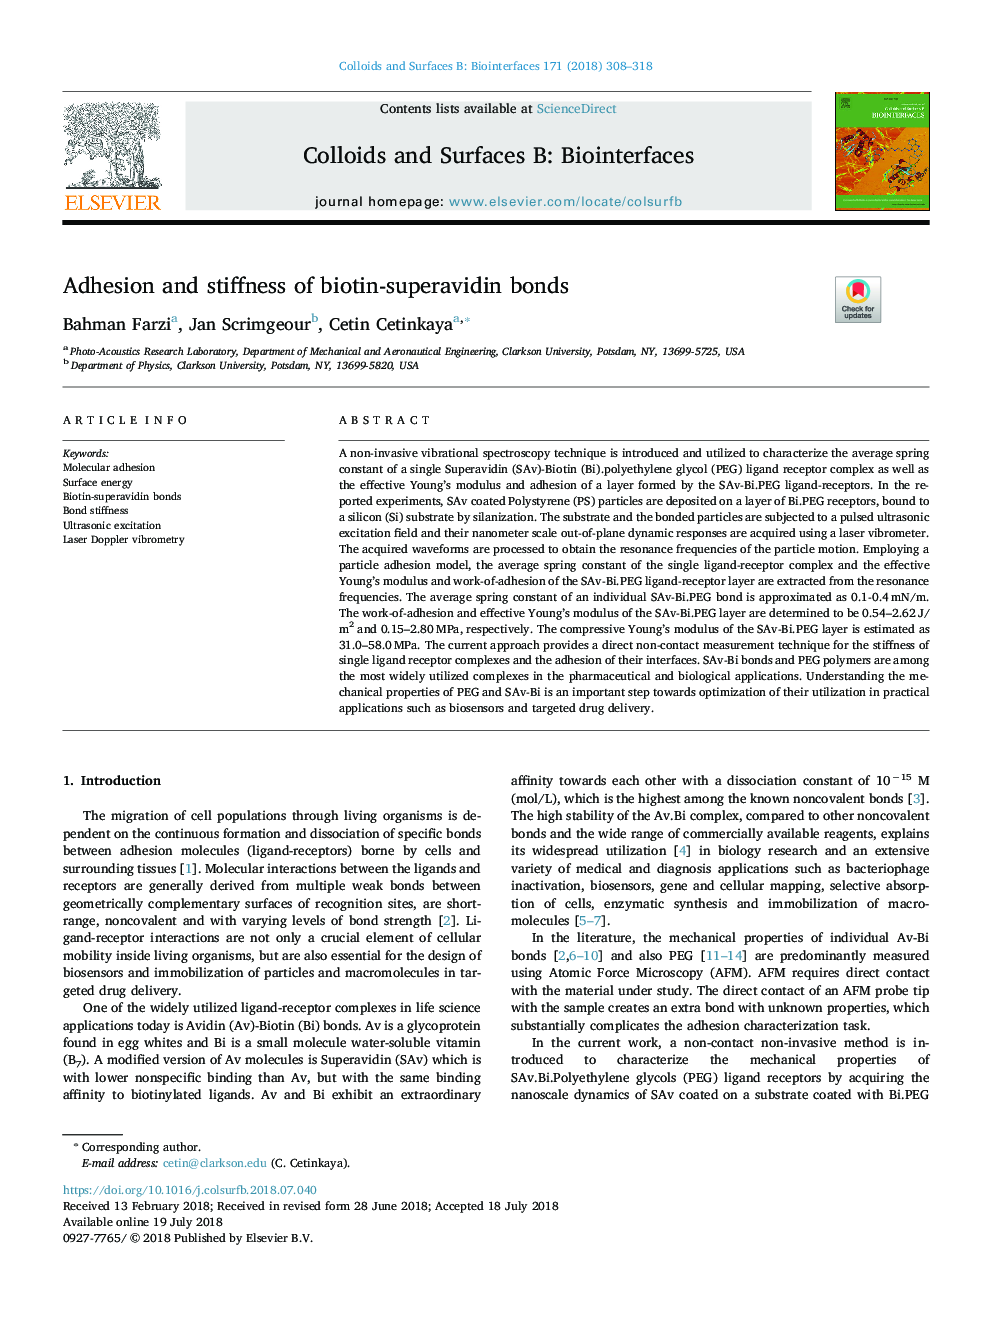 Adhesion and stiffness of biotin-superavidin bonds